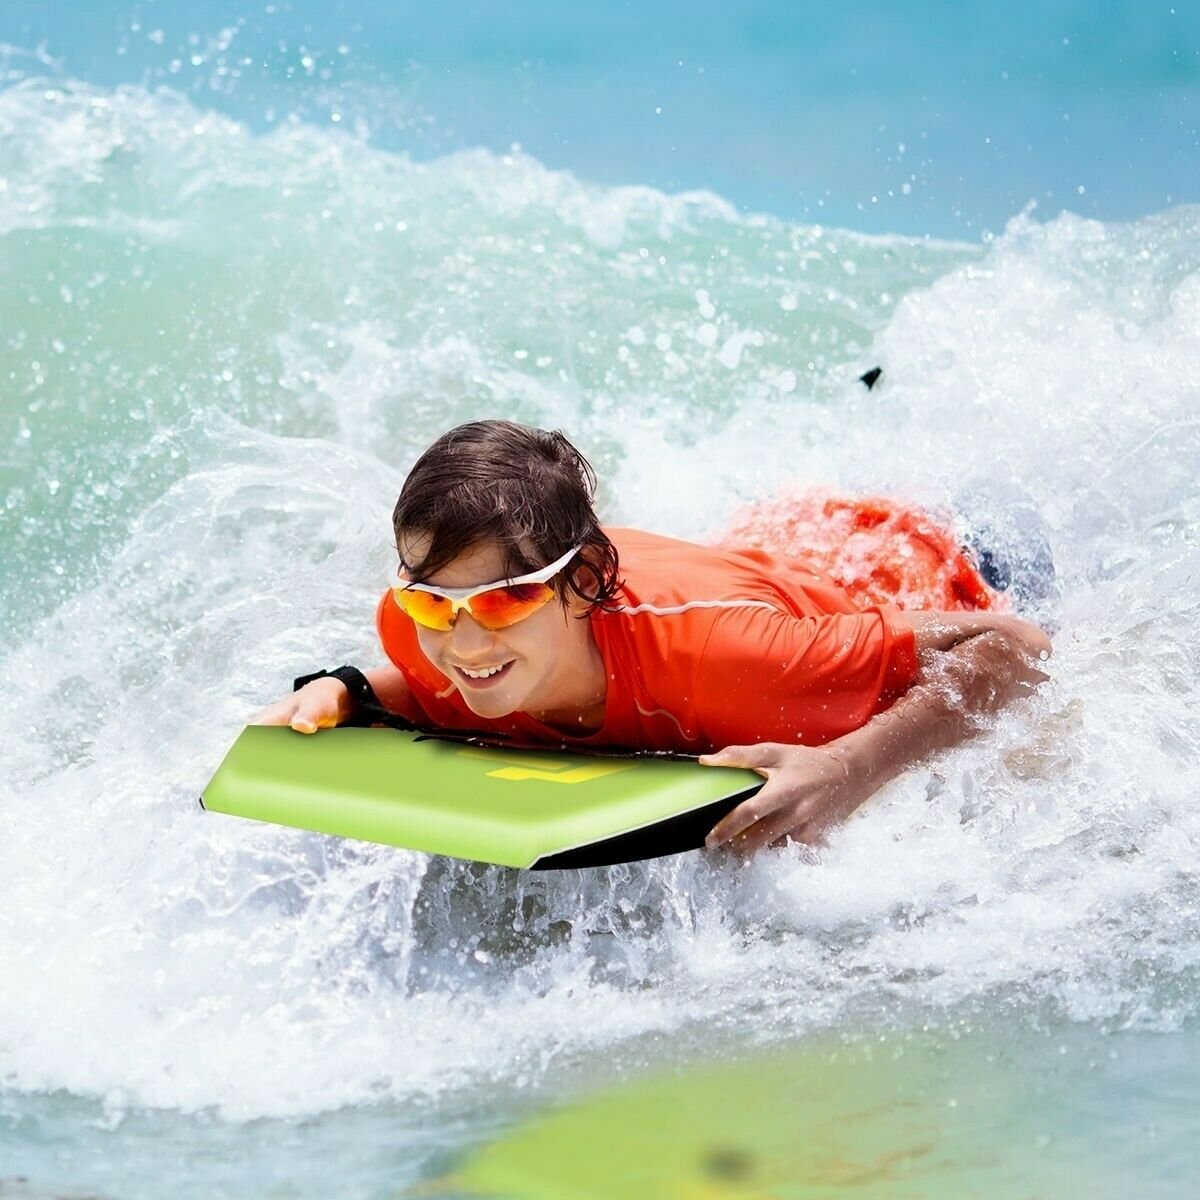 Бодиборд. Bodyboarding фото. Бодиборд для детей фото. Bodyboarding and surfing difference.